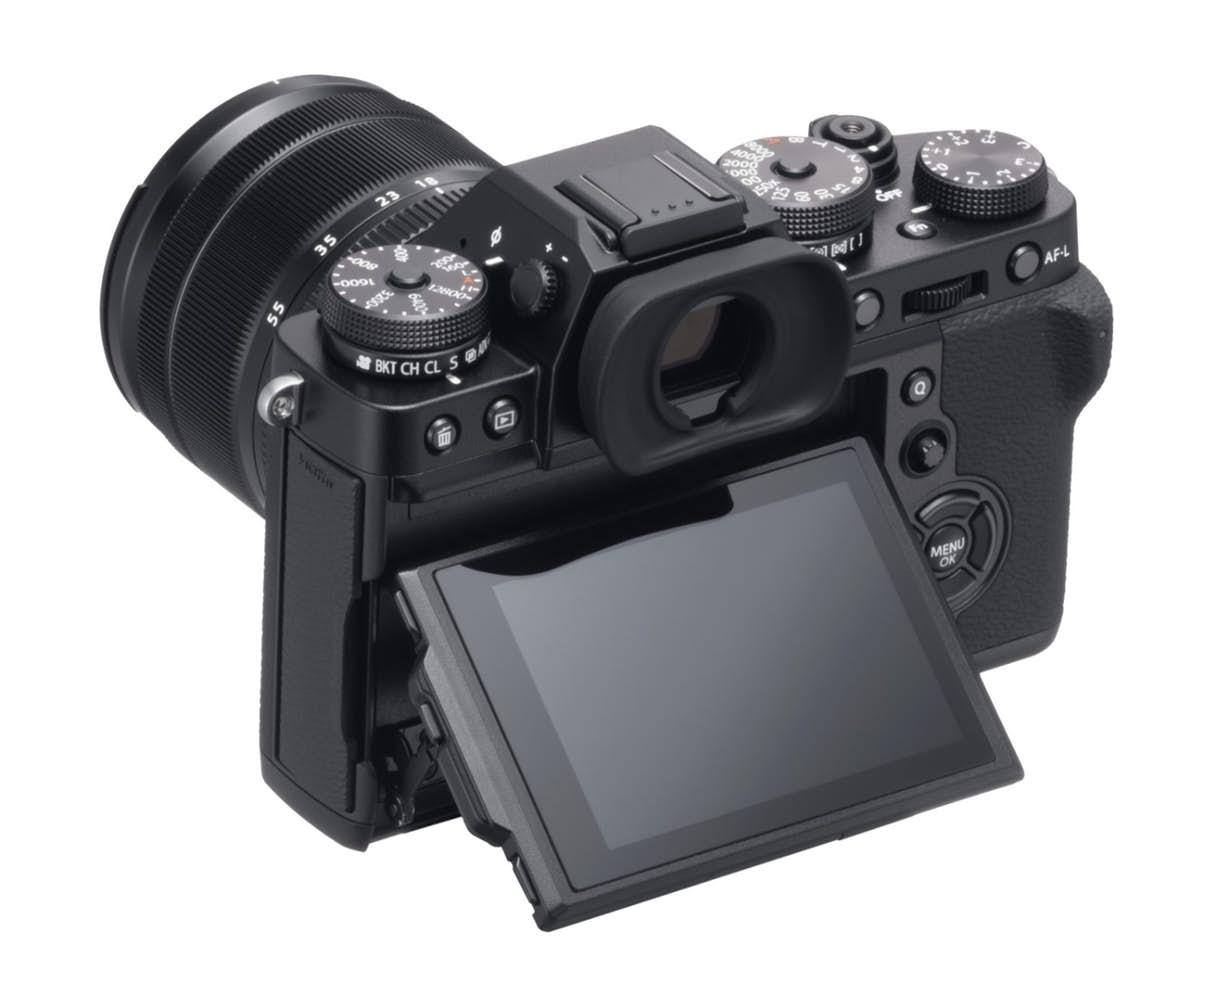 Fujifilm XT-3 aynasız kamera duyuruldu